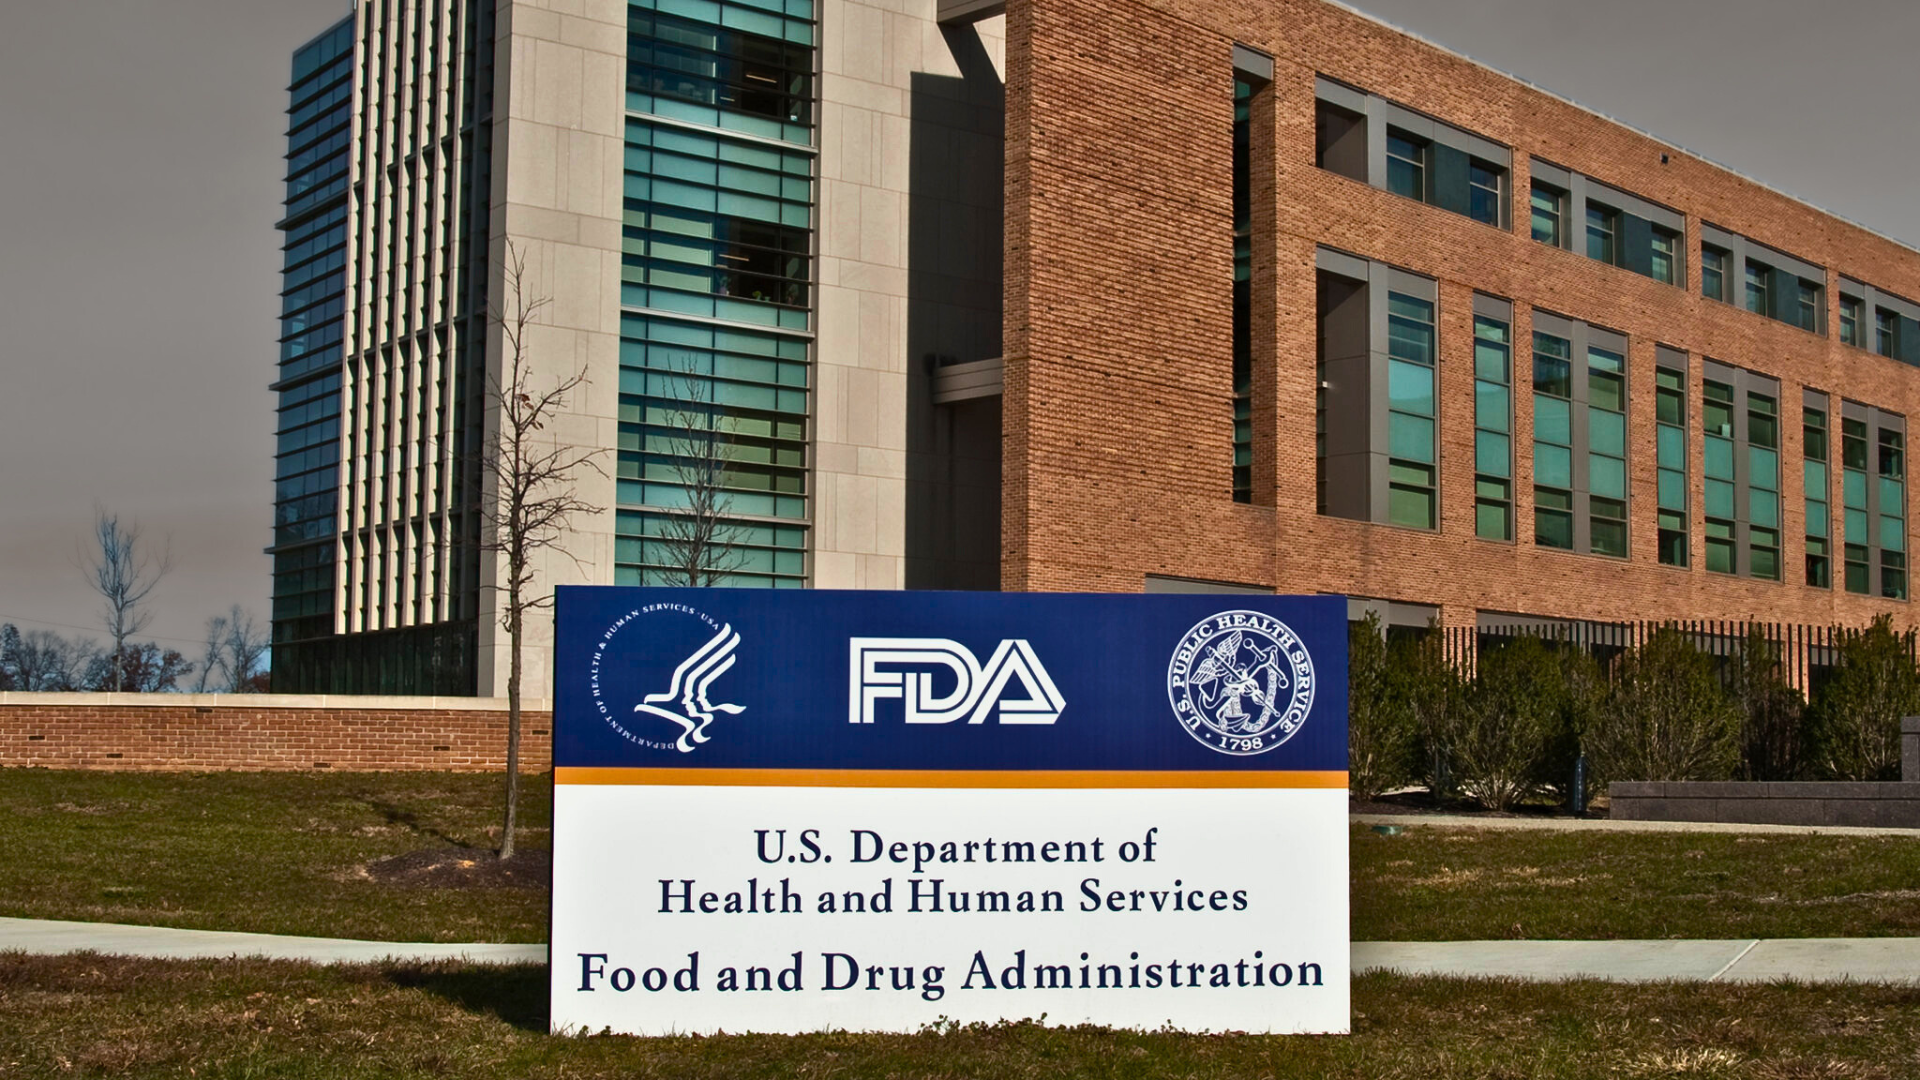 FDA Building with signage